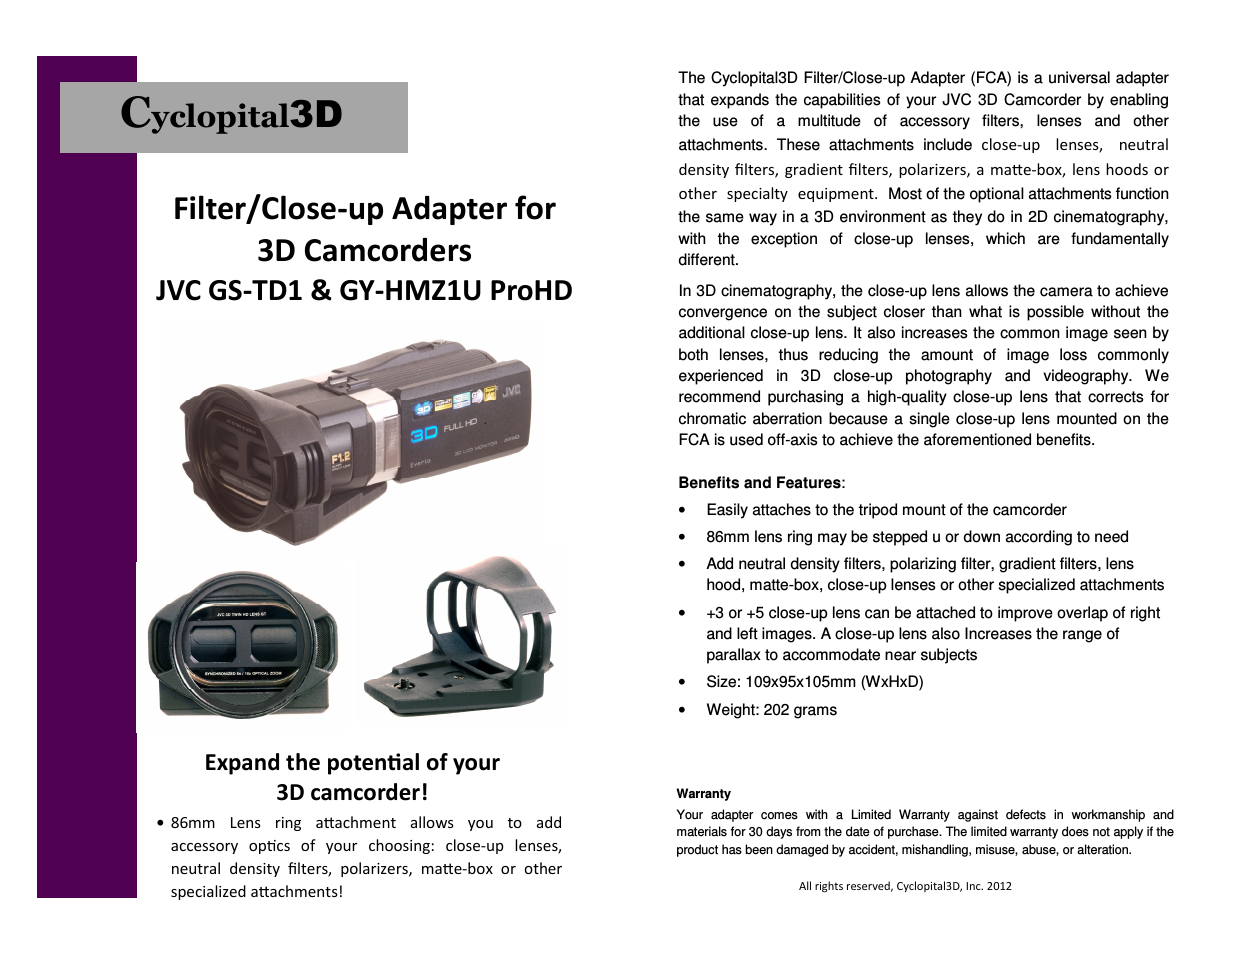 JVC Filter/Close-up Adapter